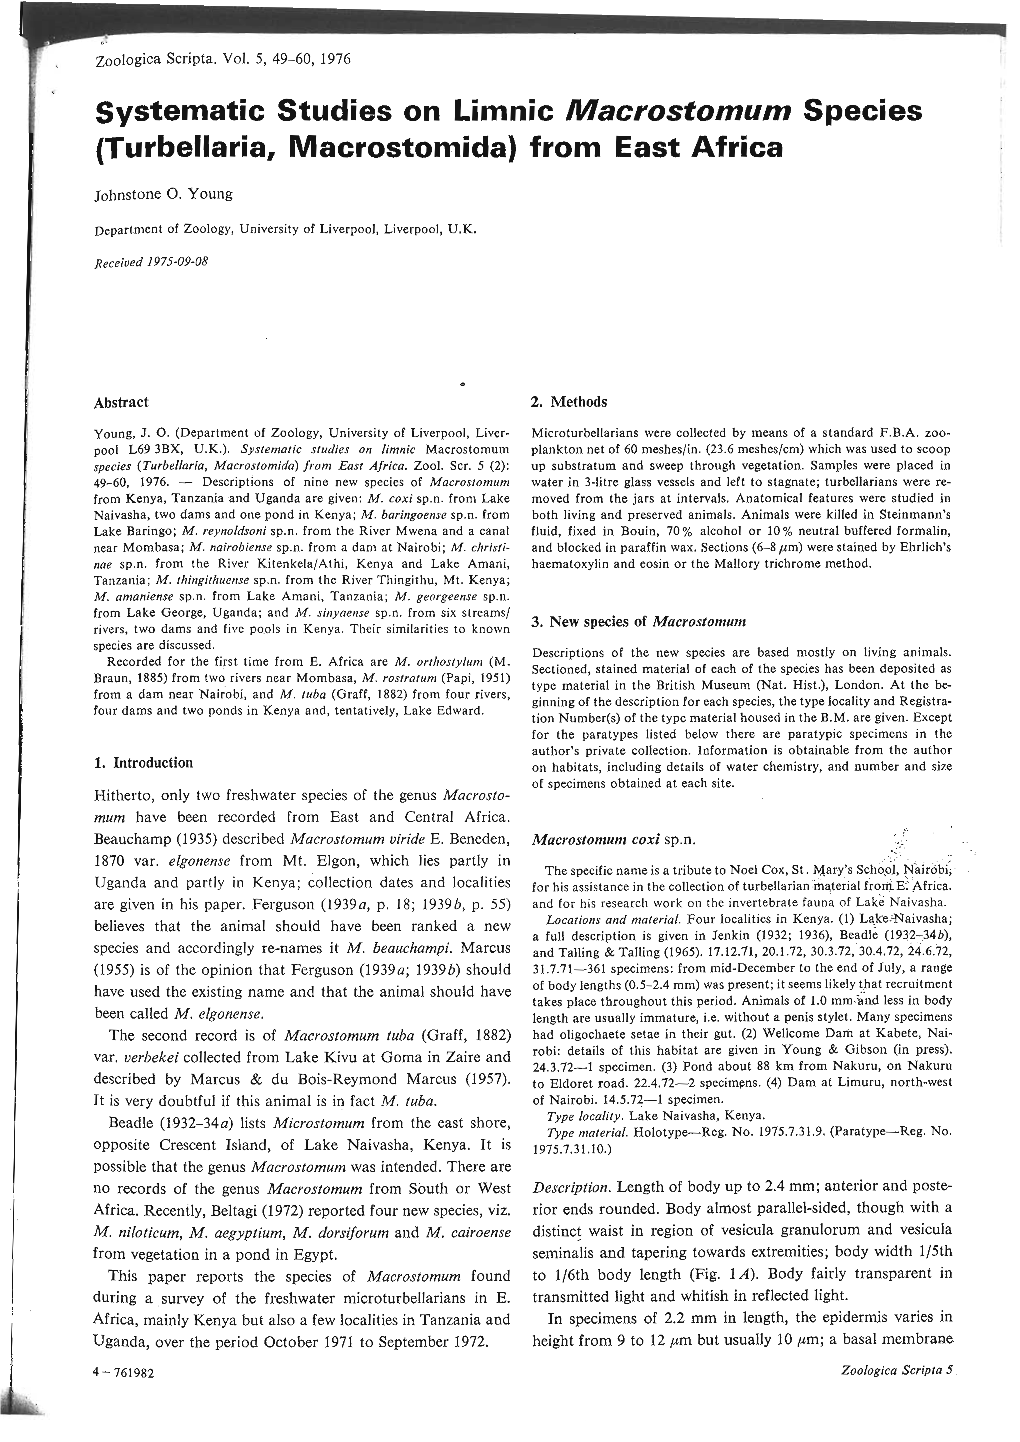 Systematic Studies on Limnic Macrostomum Species (Turbellaria, Macrostomida) from East Africa